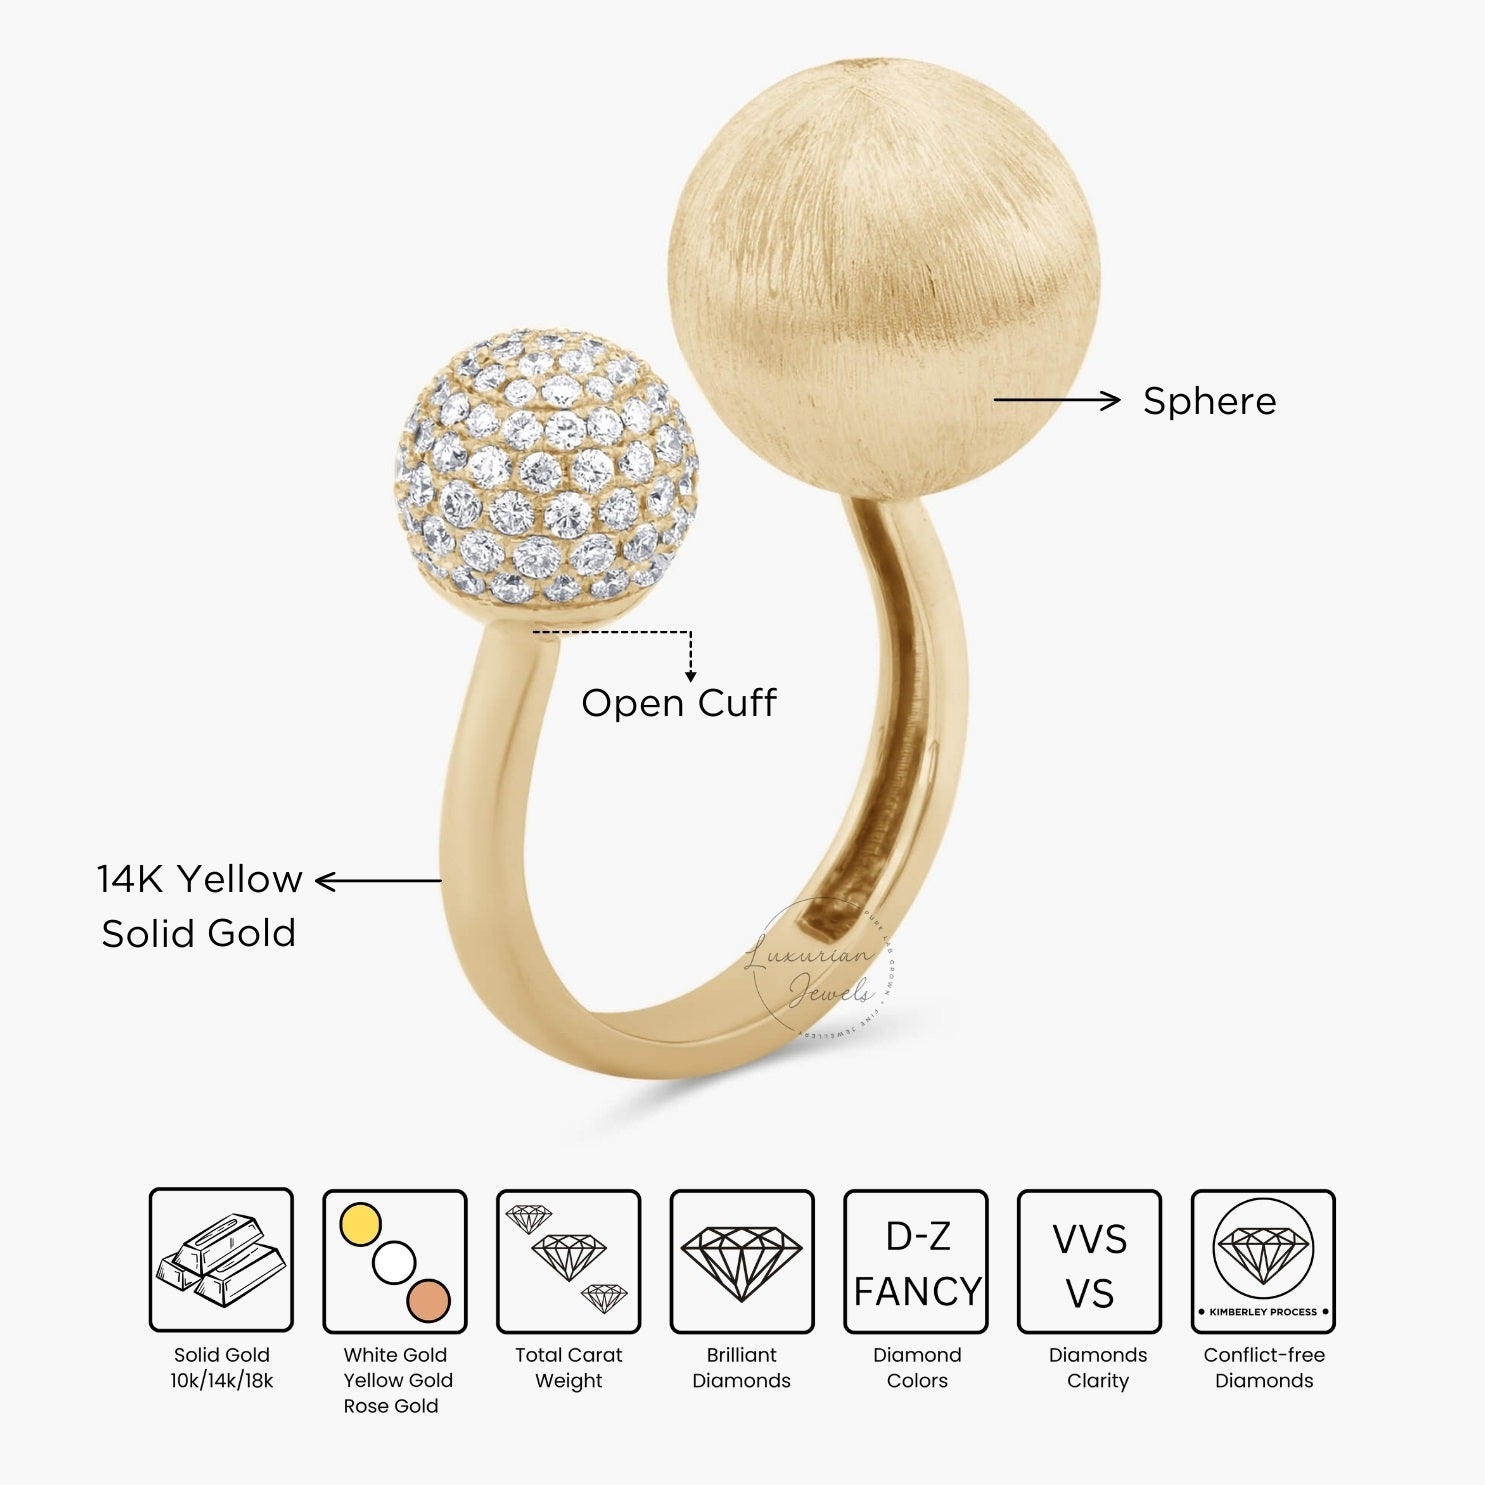 Open Cuff Round Cut Diamond Ring